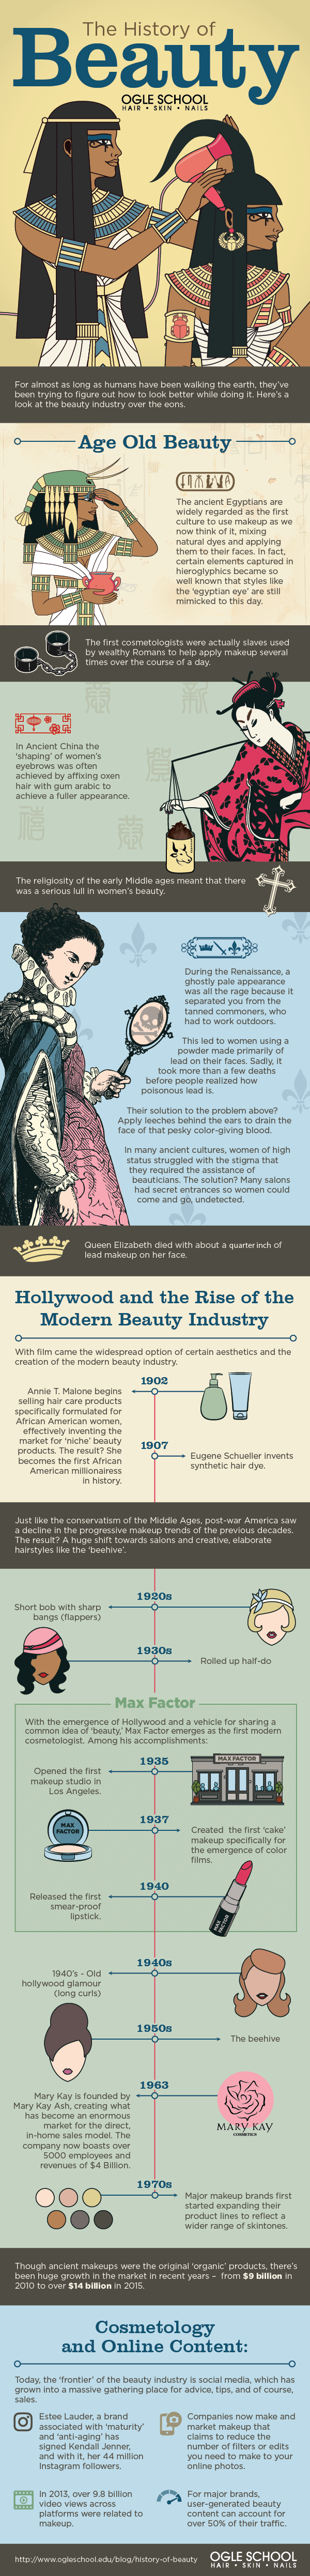 The History of Beauty